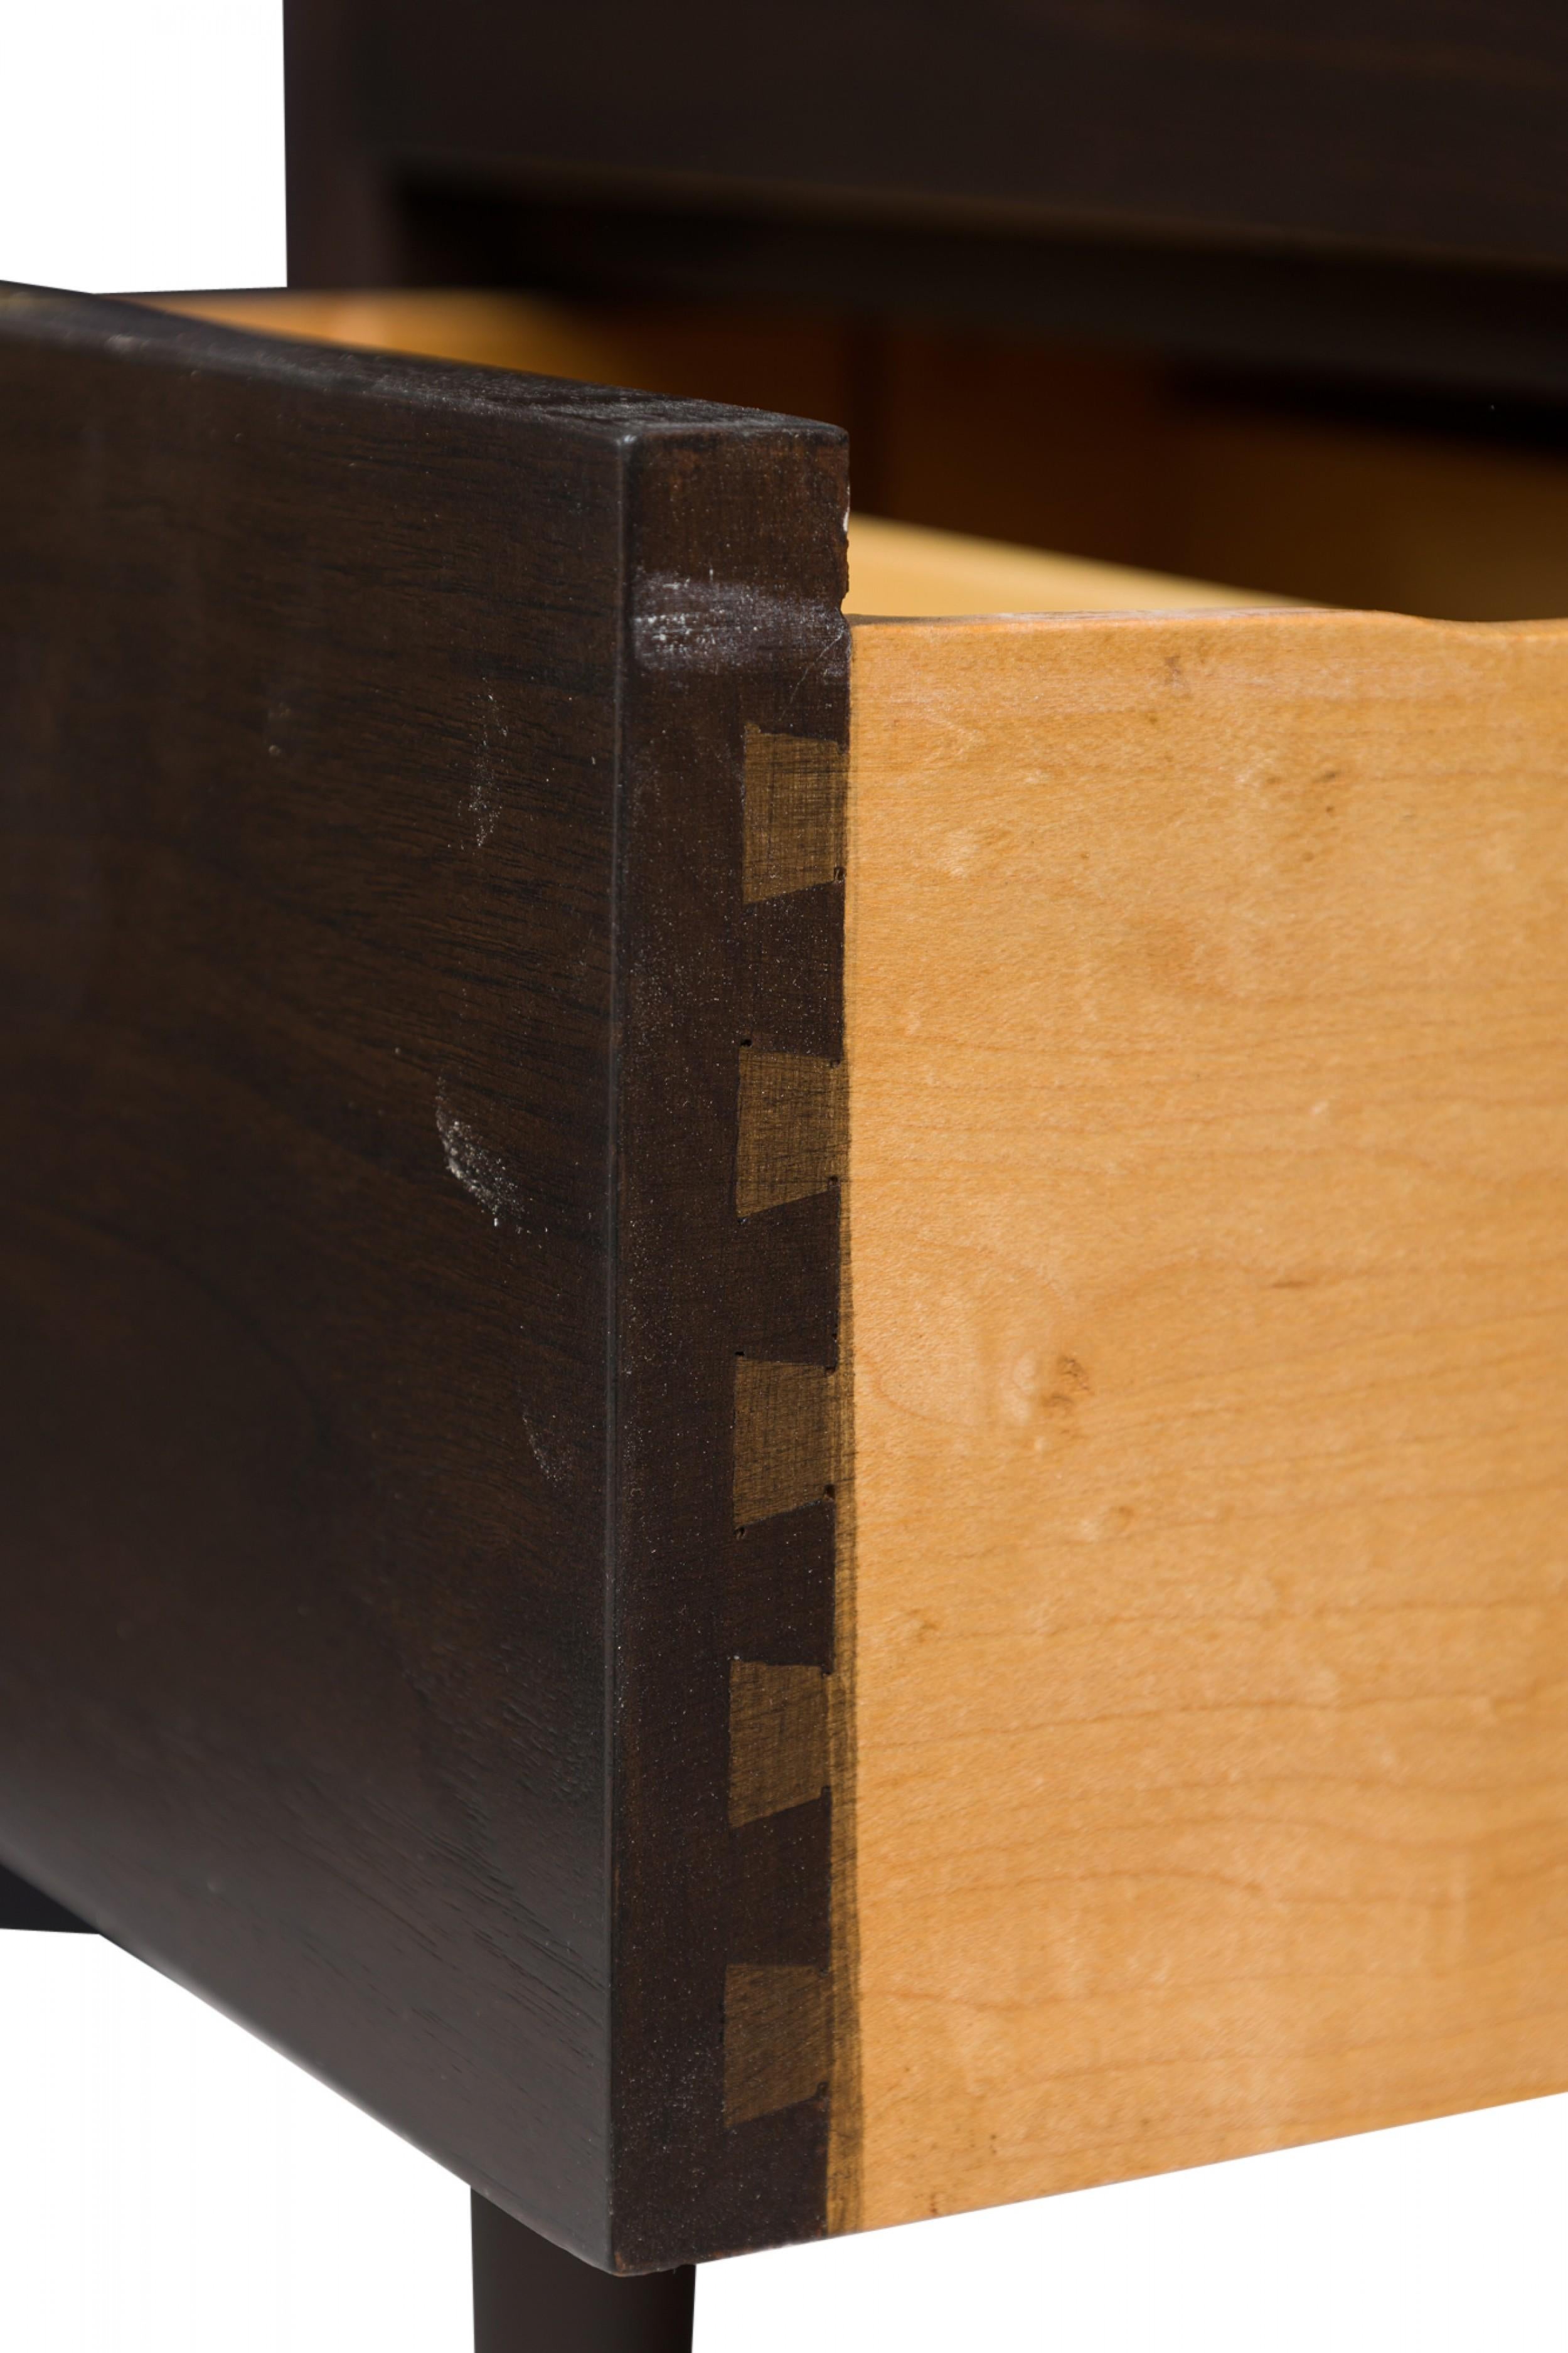 Standard Furniture Co. American Dark Wood Veneer & Brass Executive Desk For Sale 9